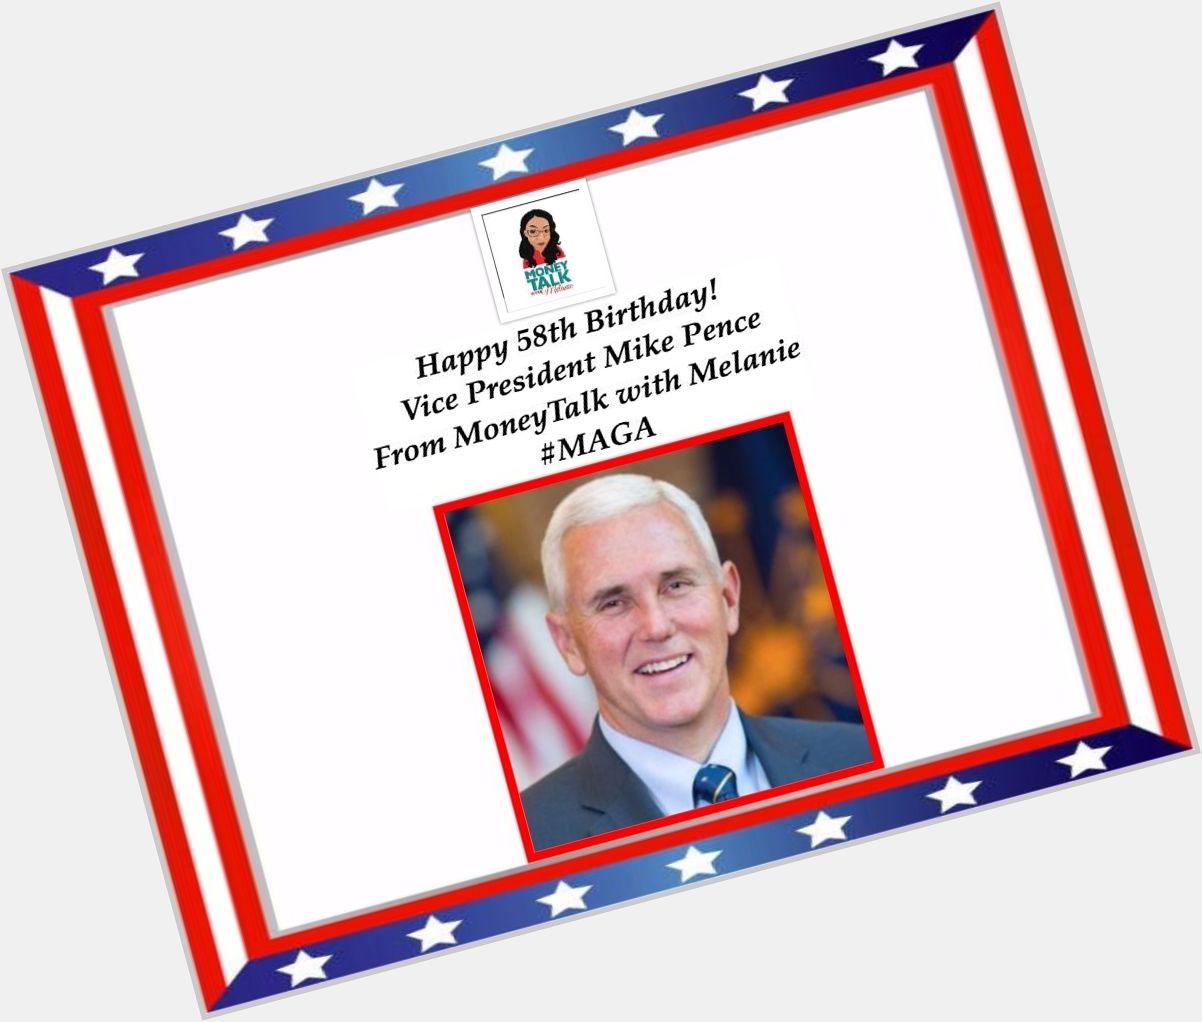   Happy Birthday Vice President Pence! 